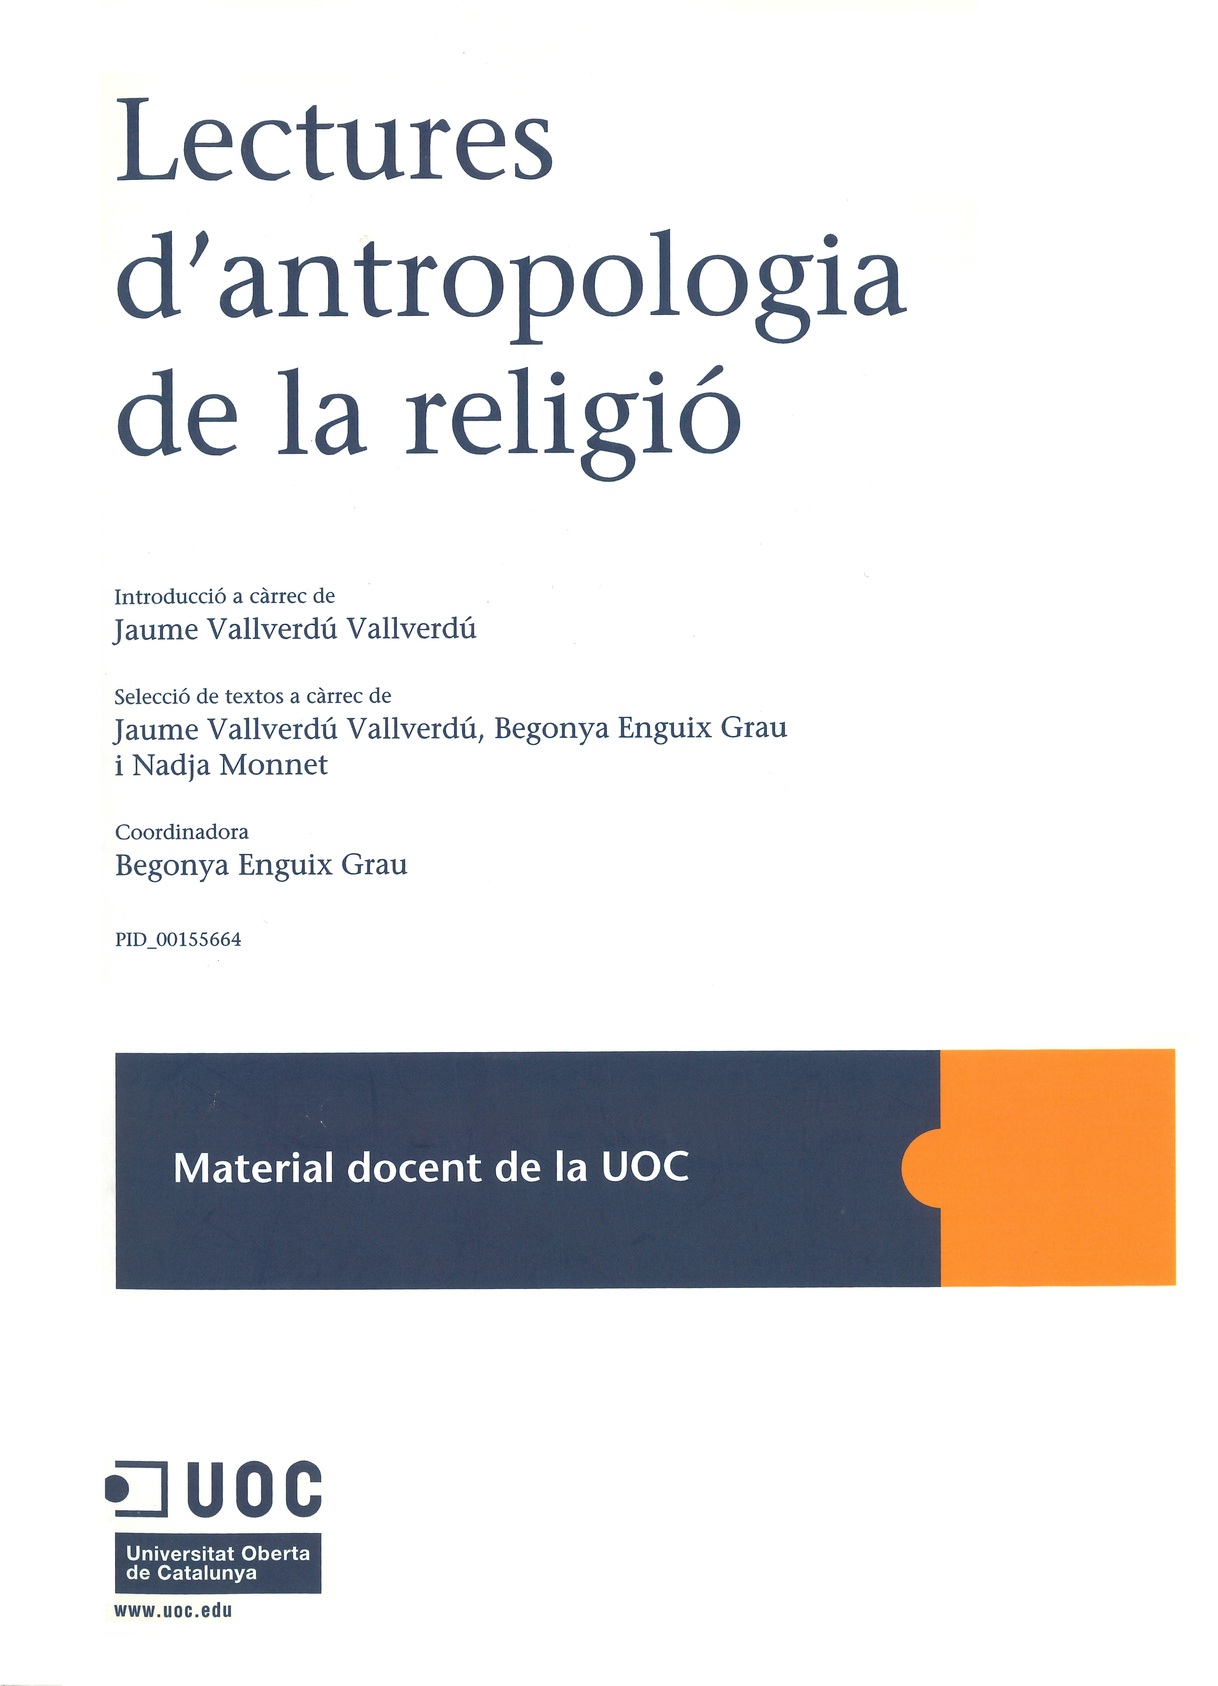 Imagen de portada del libro Lectures d'antropologia de la religió